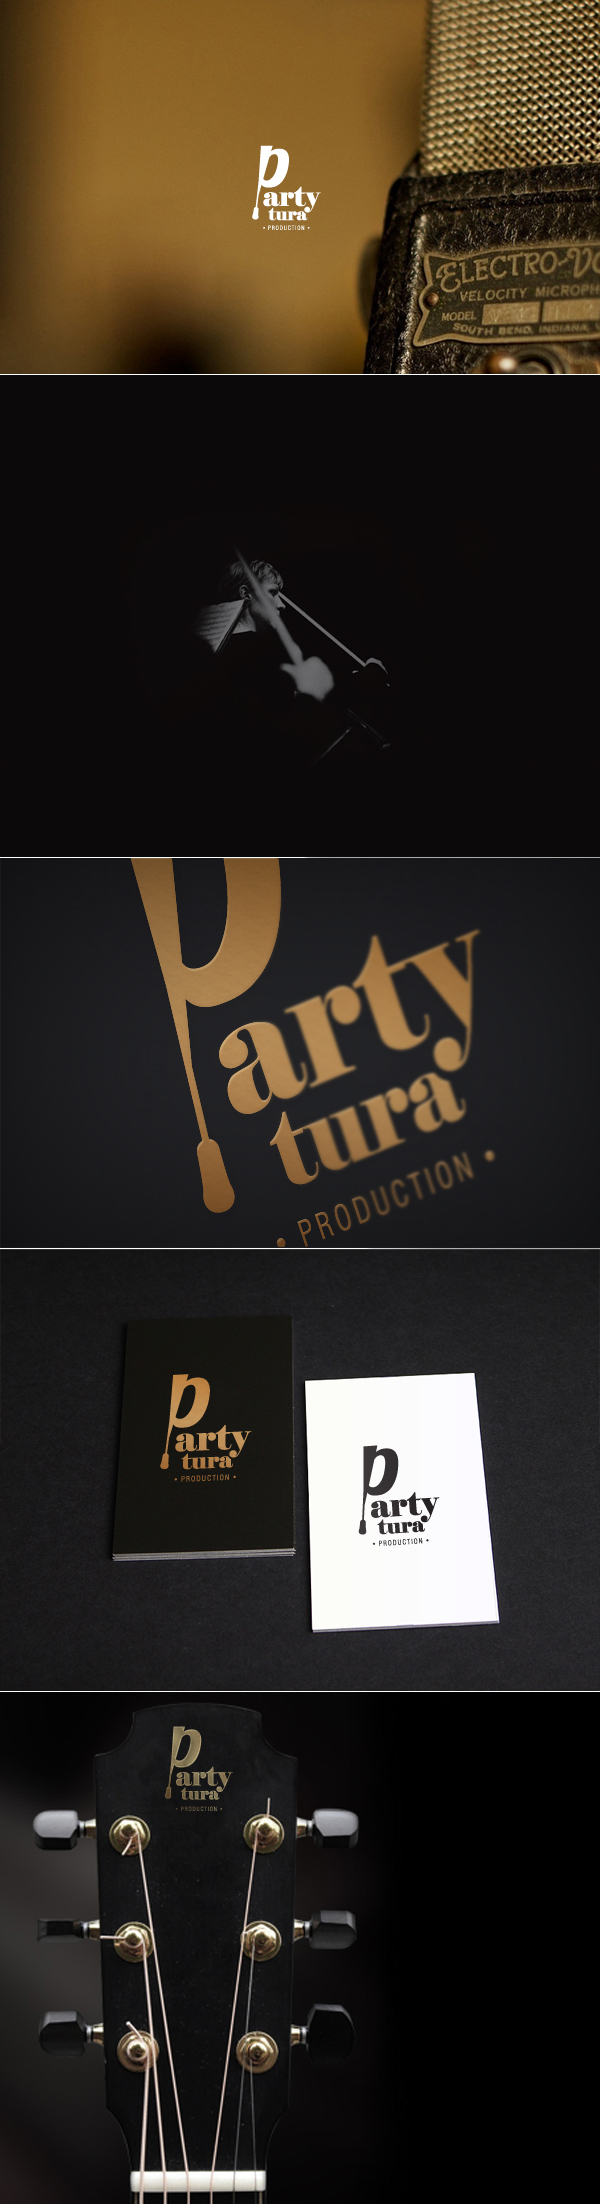 Logotype PartyTura agency